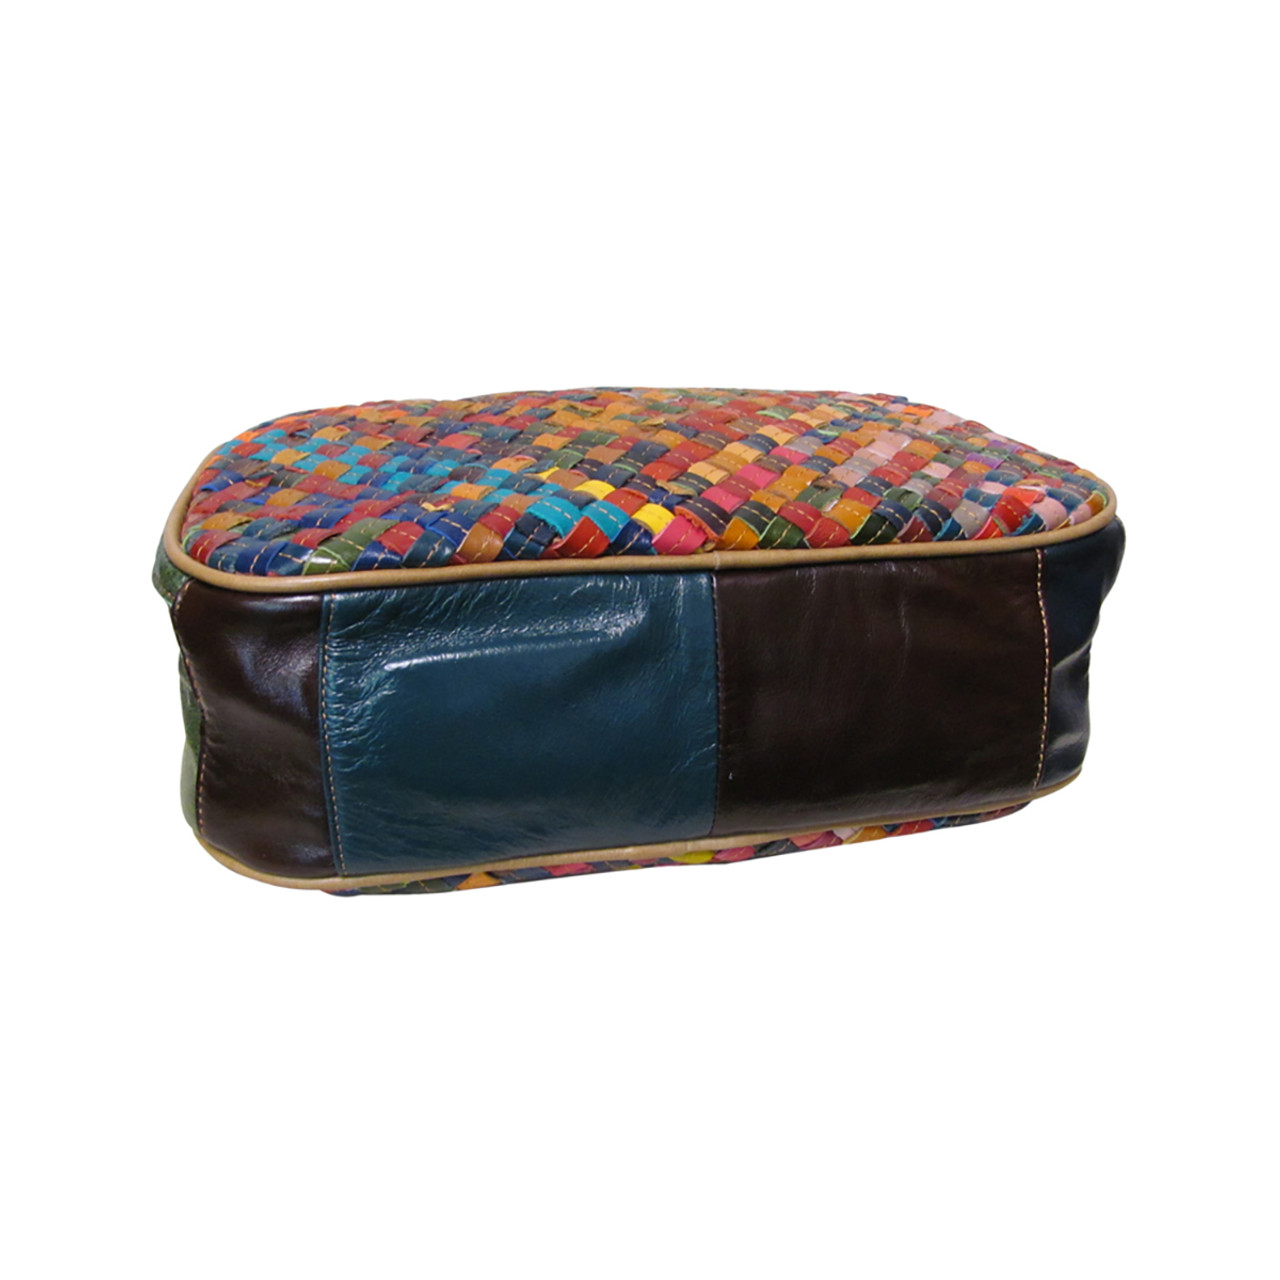 Amerileather® Beckett Woven Handbag product image